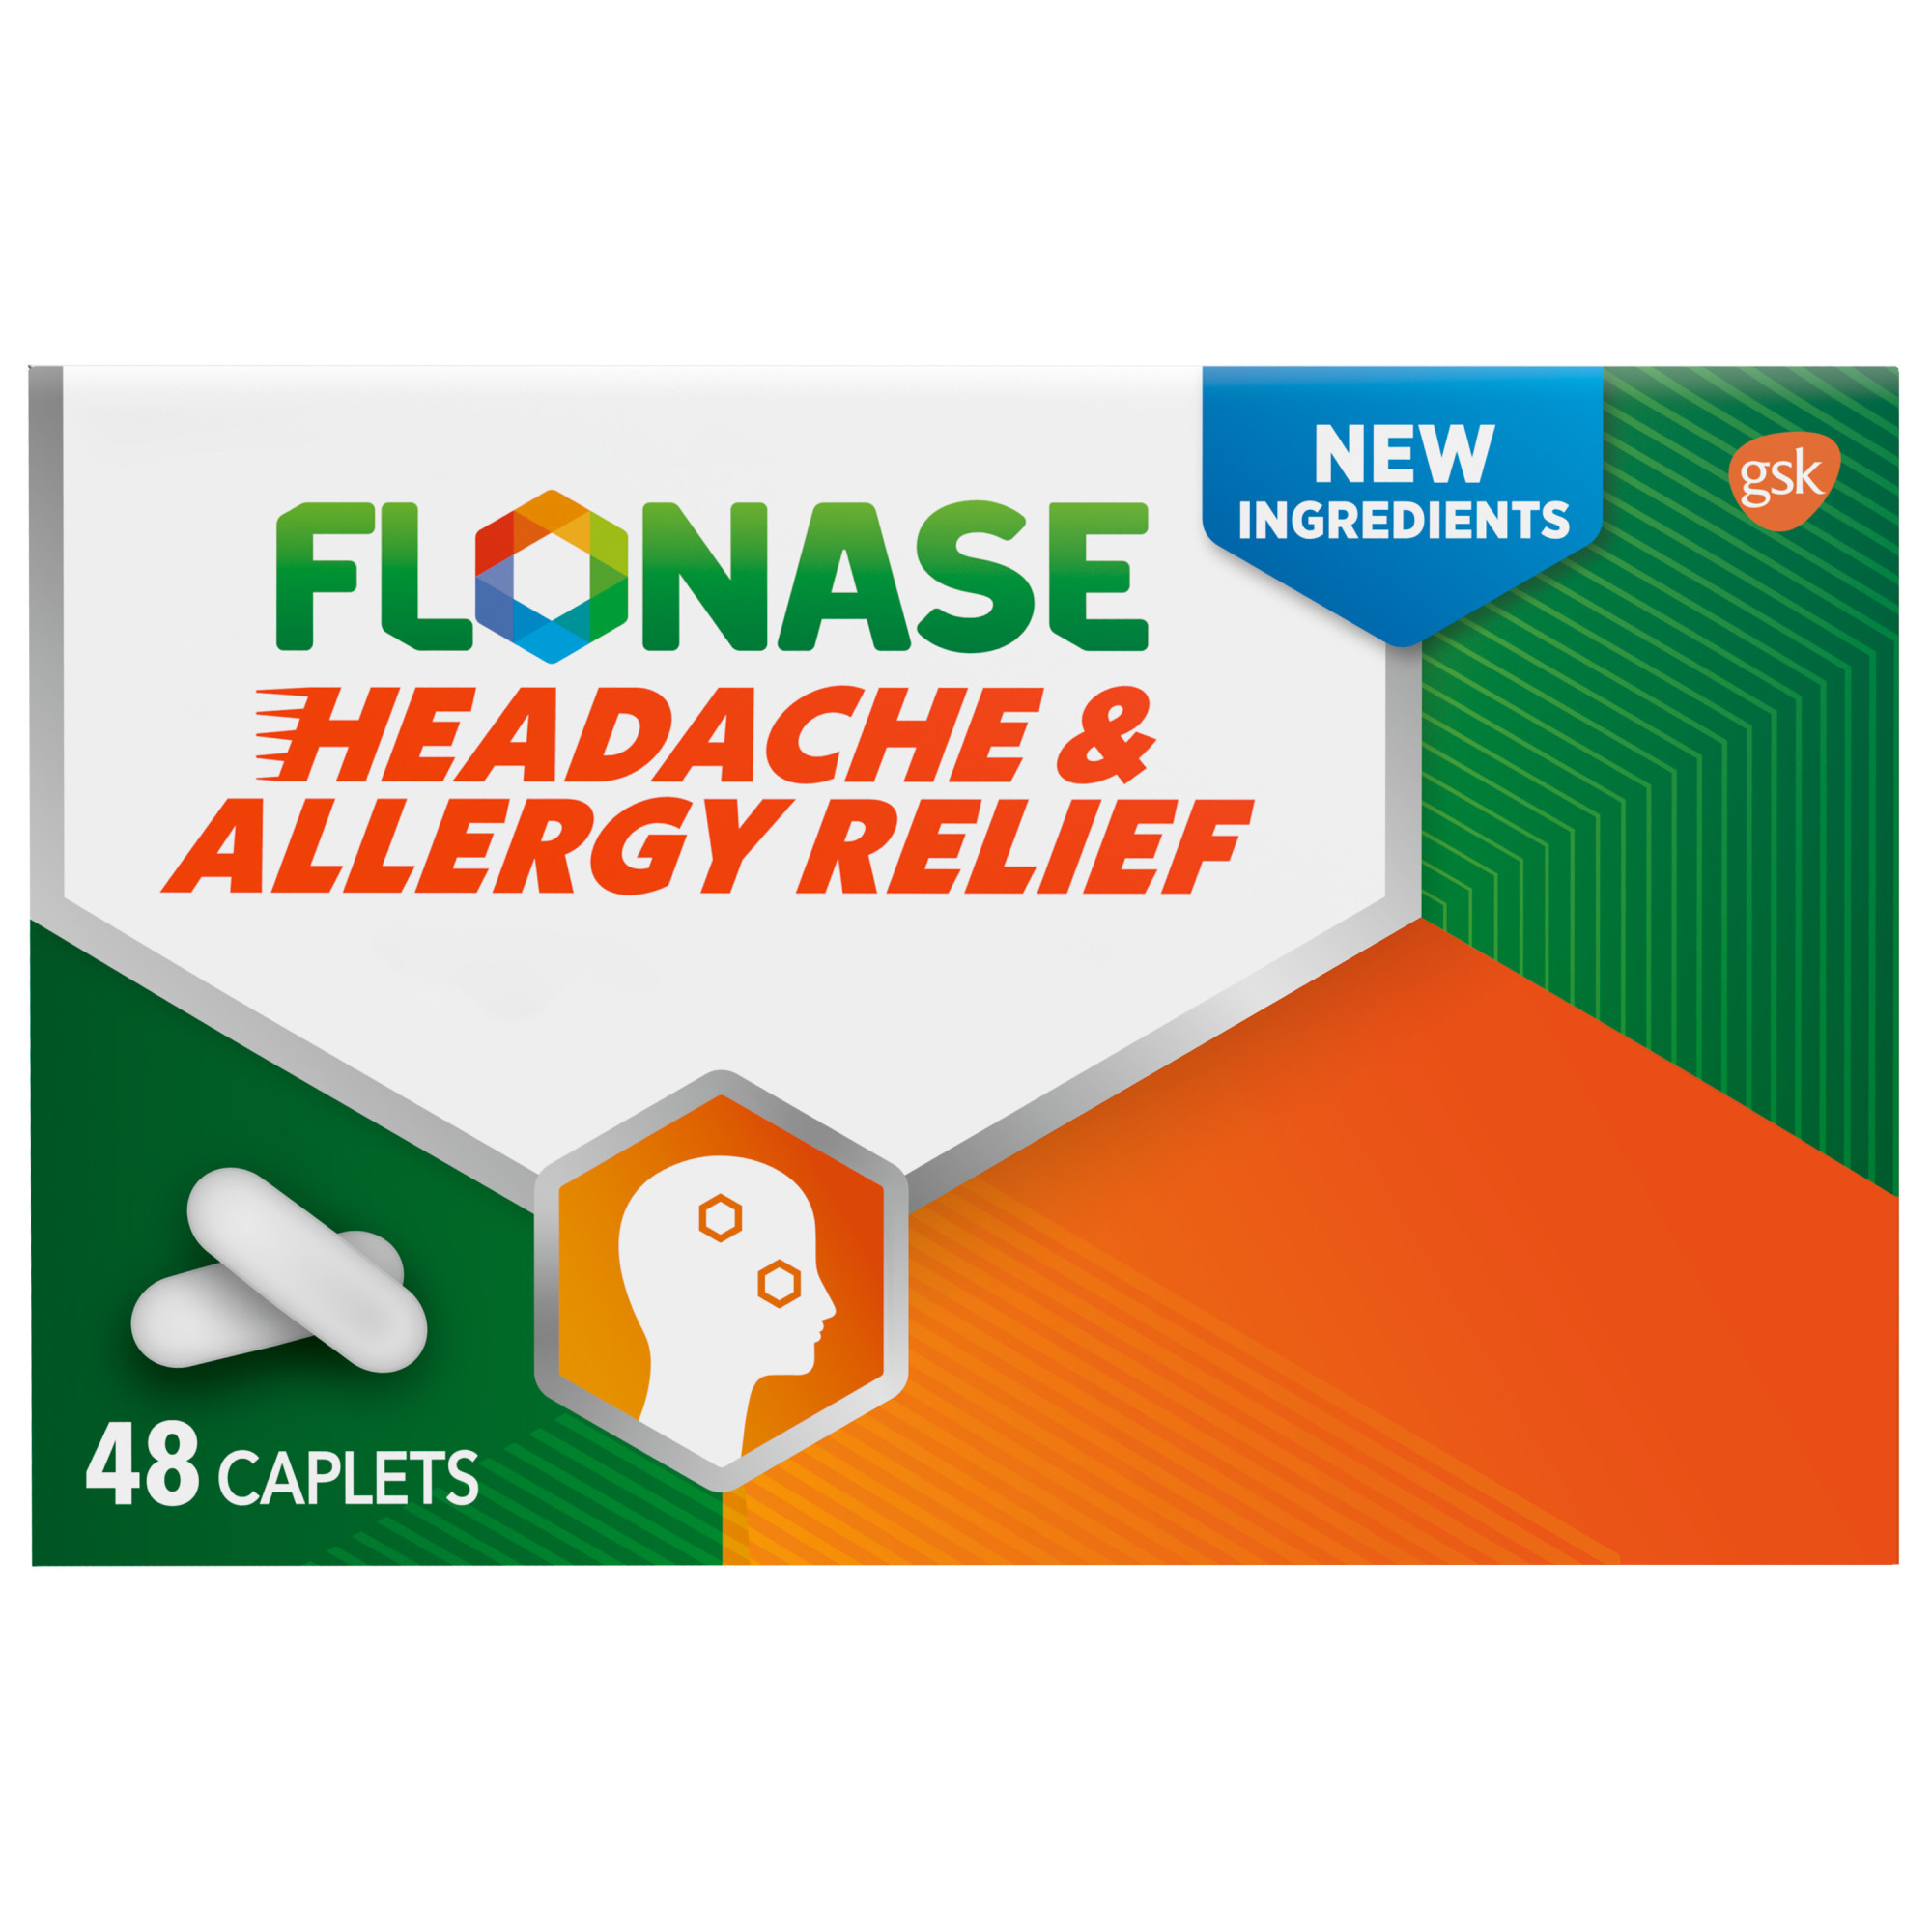 Flonase Headache and Allergy Relief Pills, 48 Caplets - image 1 of 11